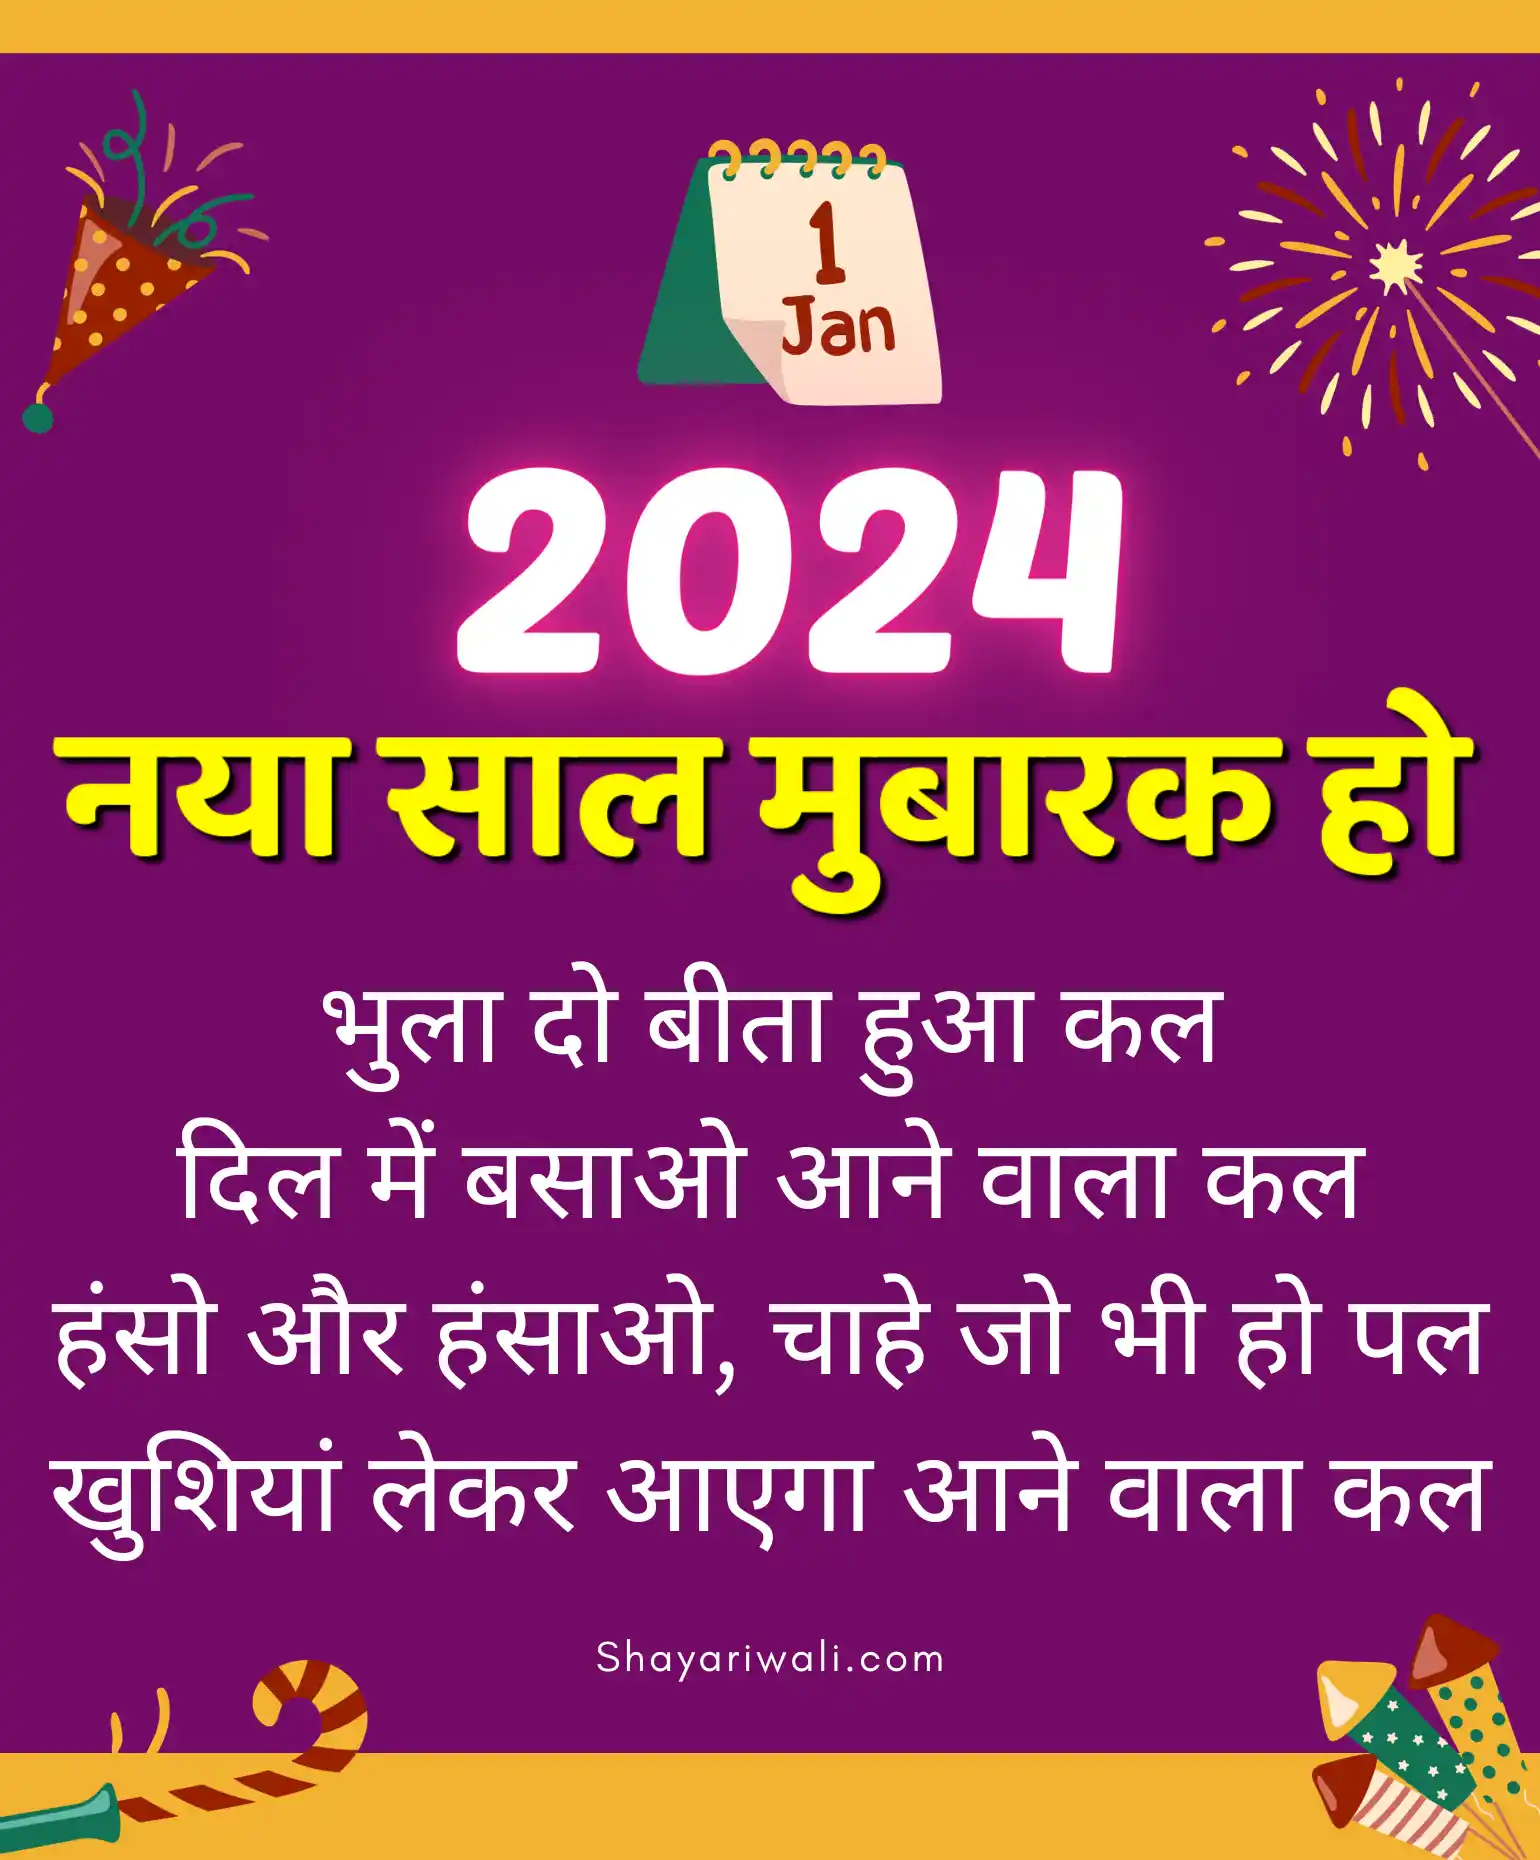 Happy New Year Shayari Hindi Image